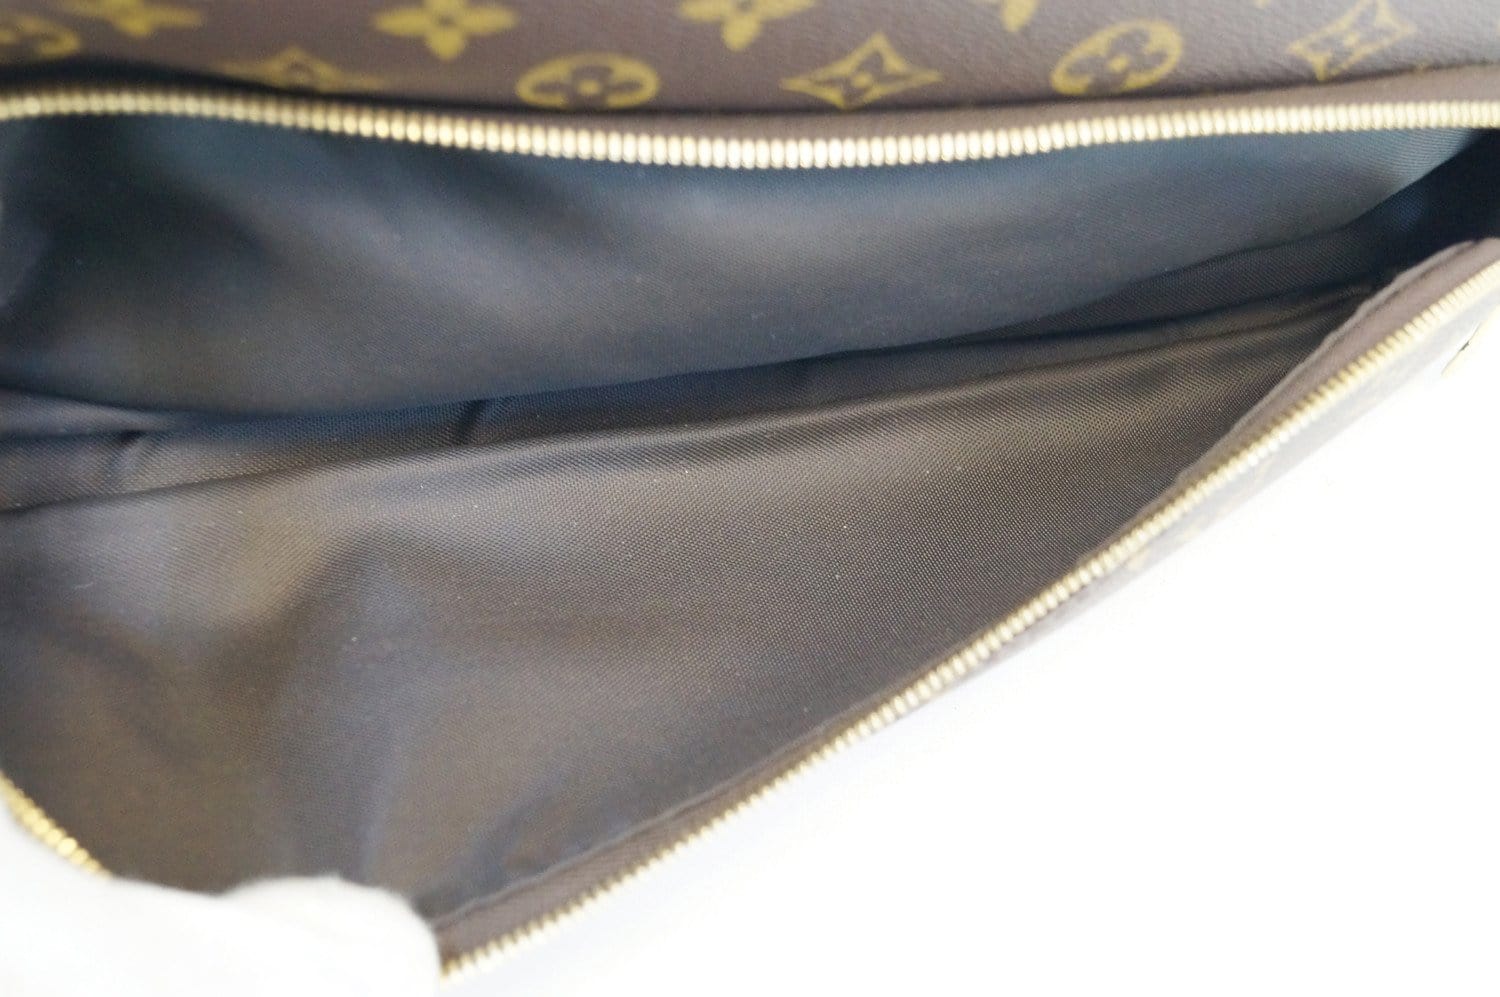 Louis Vuitton-Monogram Evasion MM Travel Bag - Couture Traders